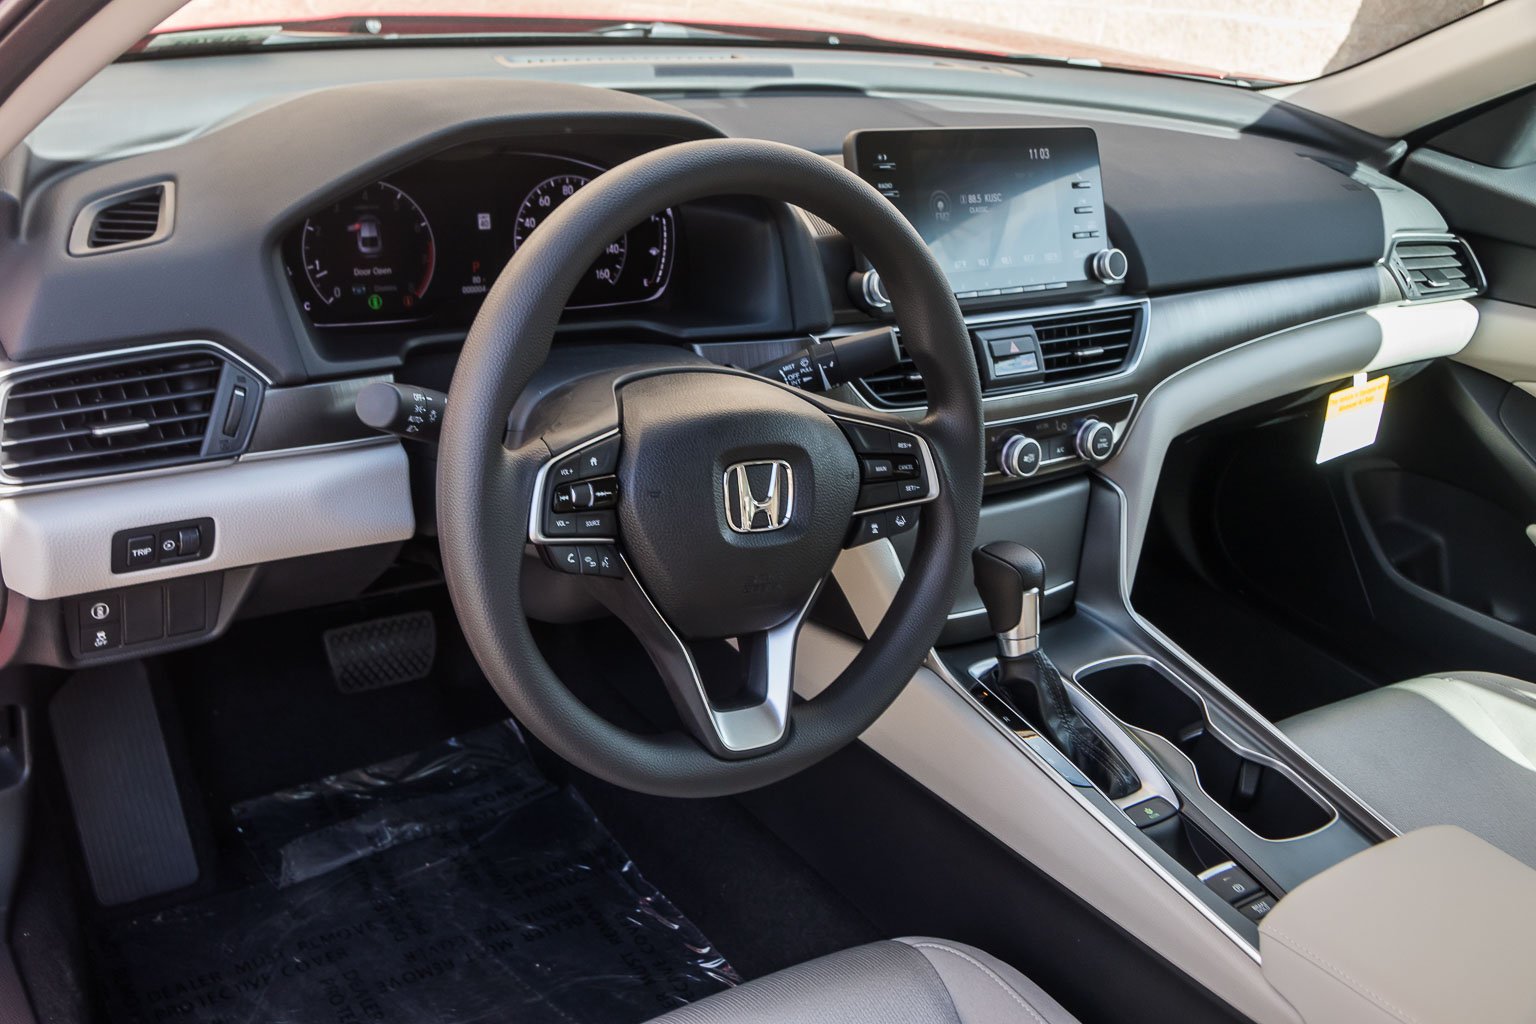 New 2019 Honda Accord Sedan Lx 1 5t Fwd 4dr Car